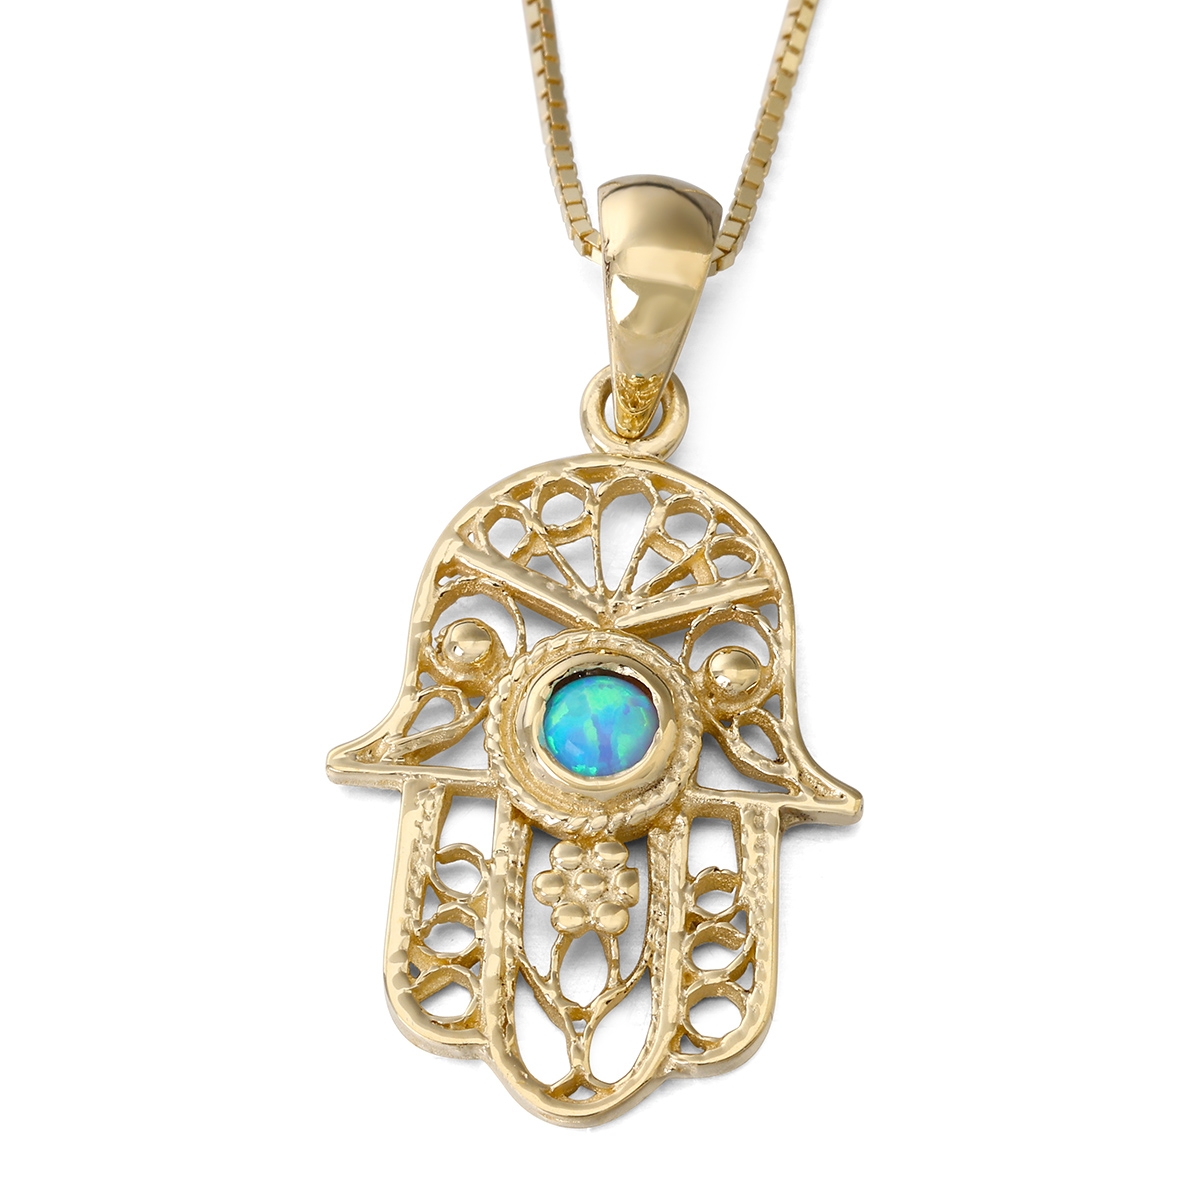 14K Gold Filigree Hamsa Pendant Necklace with Blue Opal Stone - 1